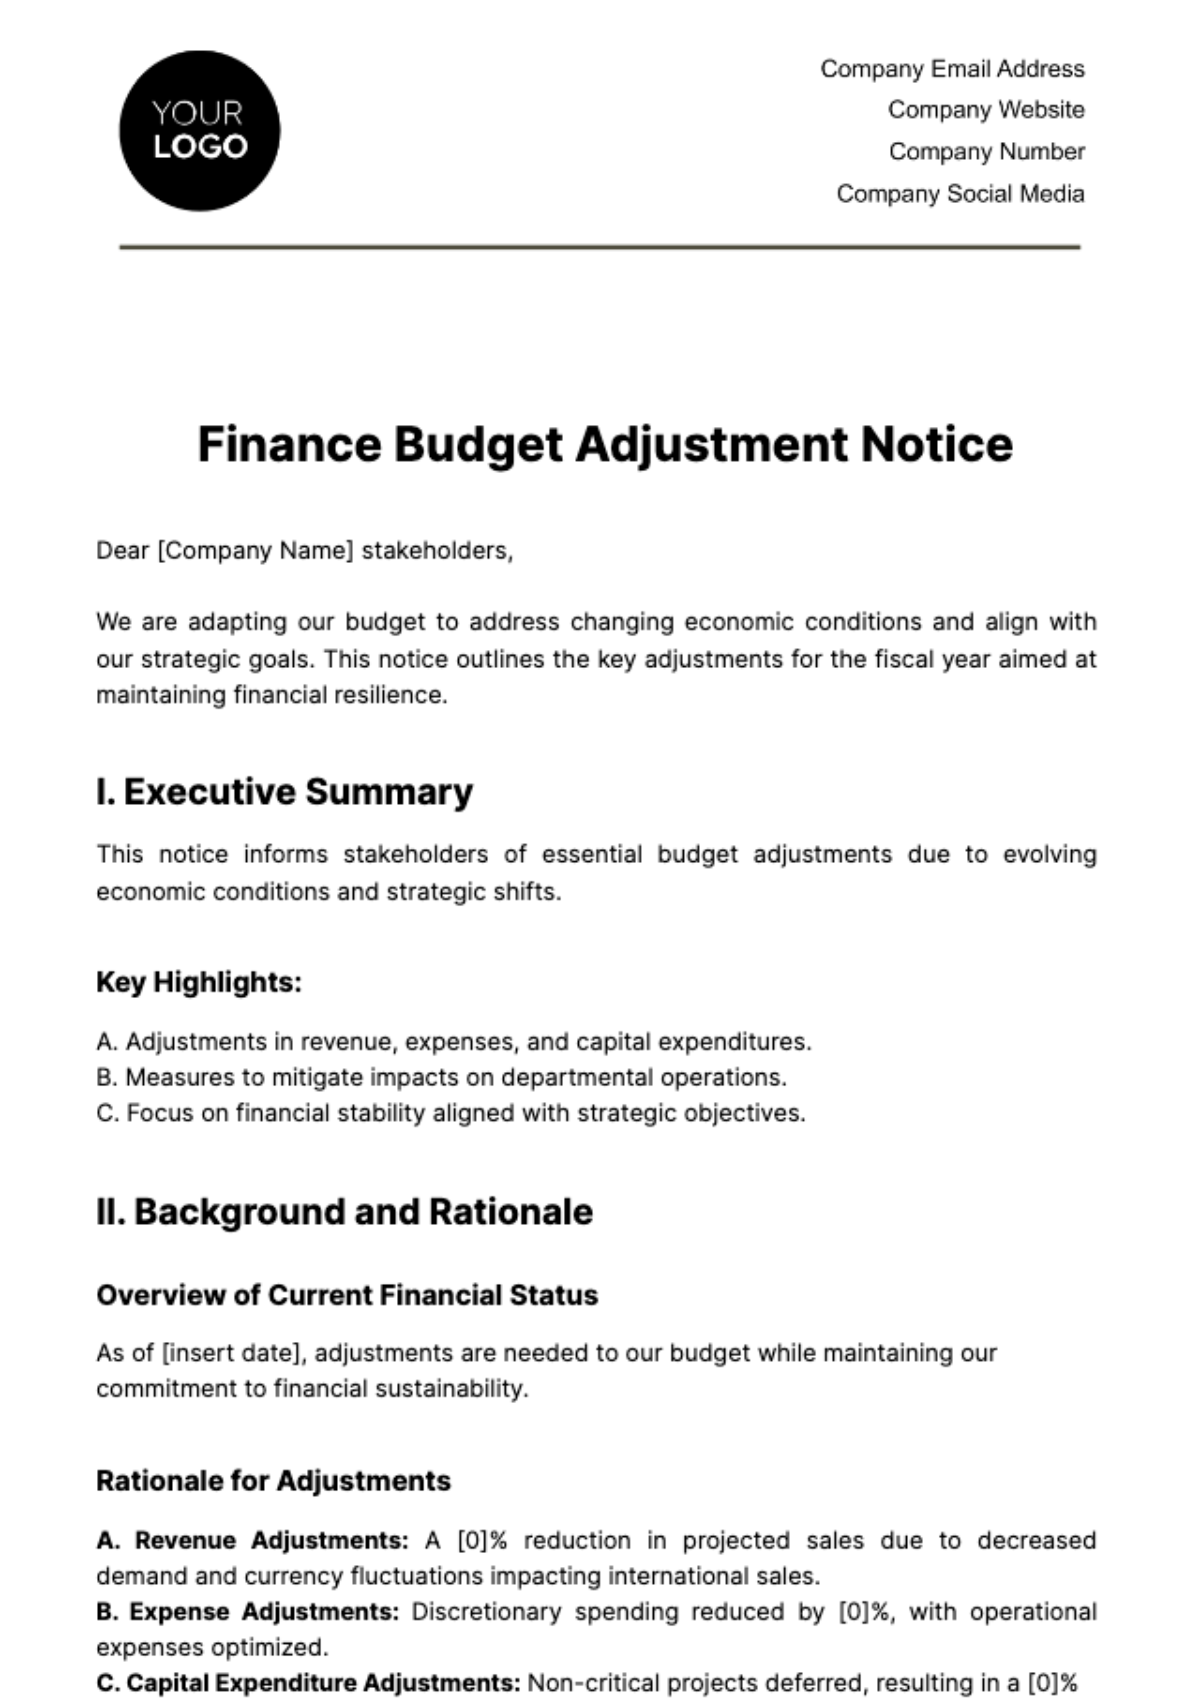 Free Finance Budget Adjustment Notice Template